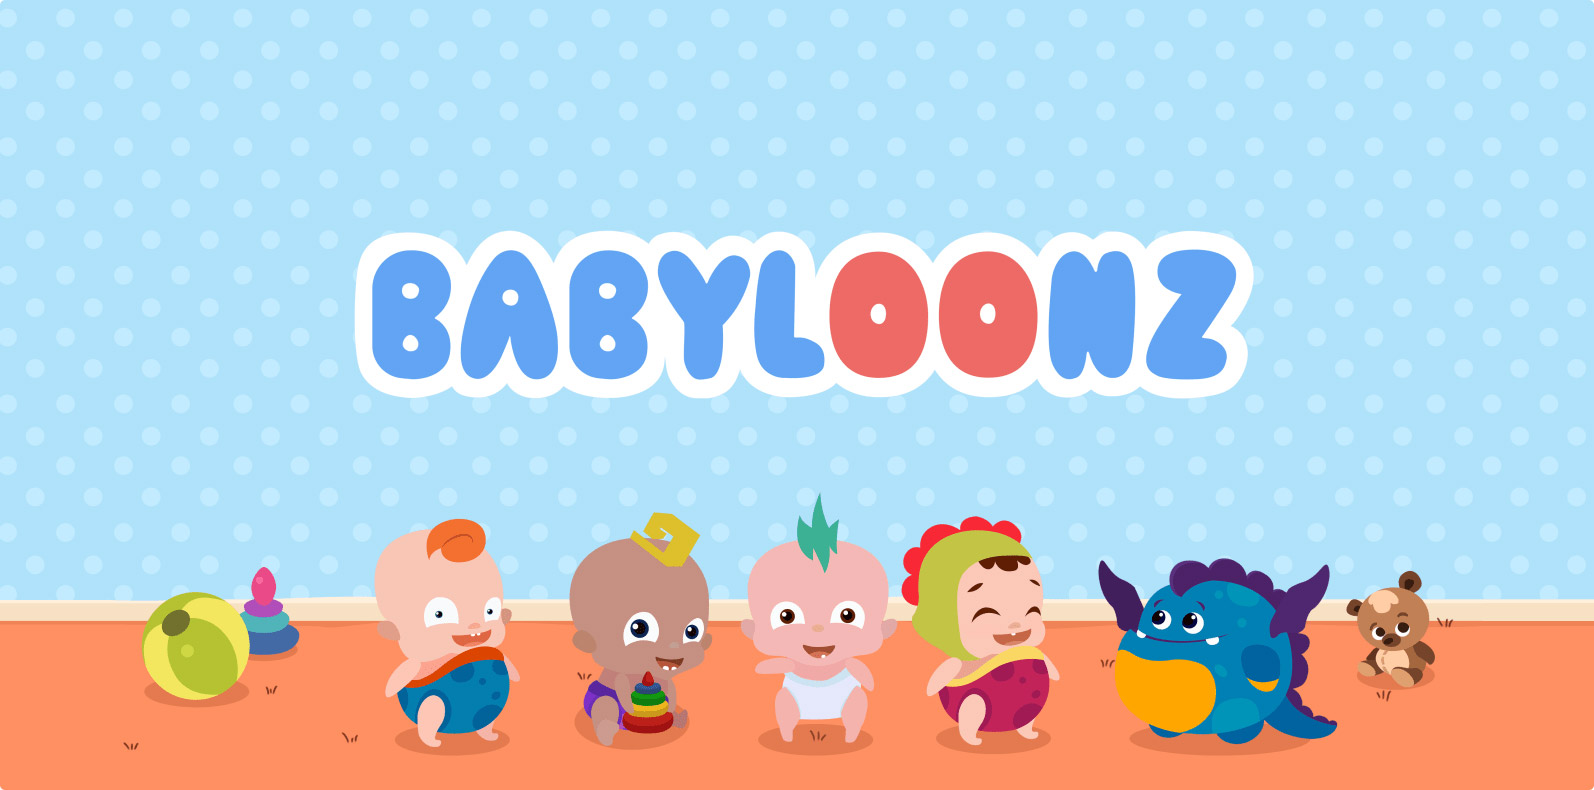 Babyloonz – arcade game designed and developed